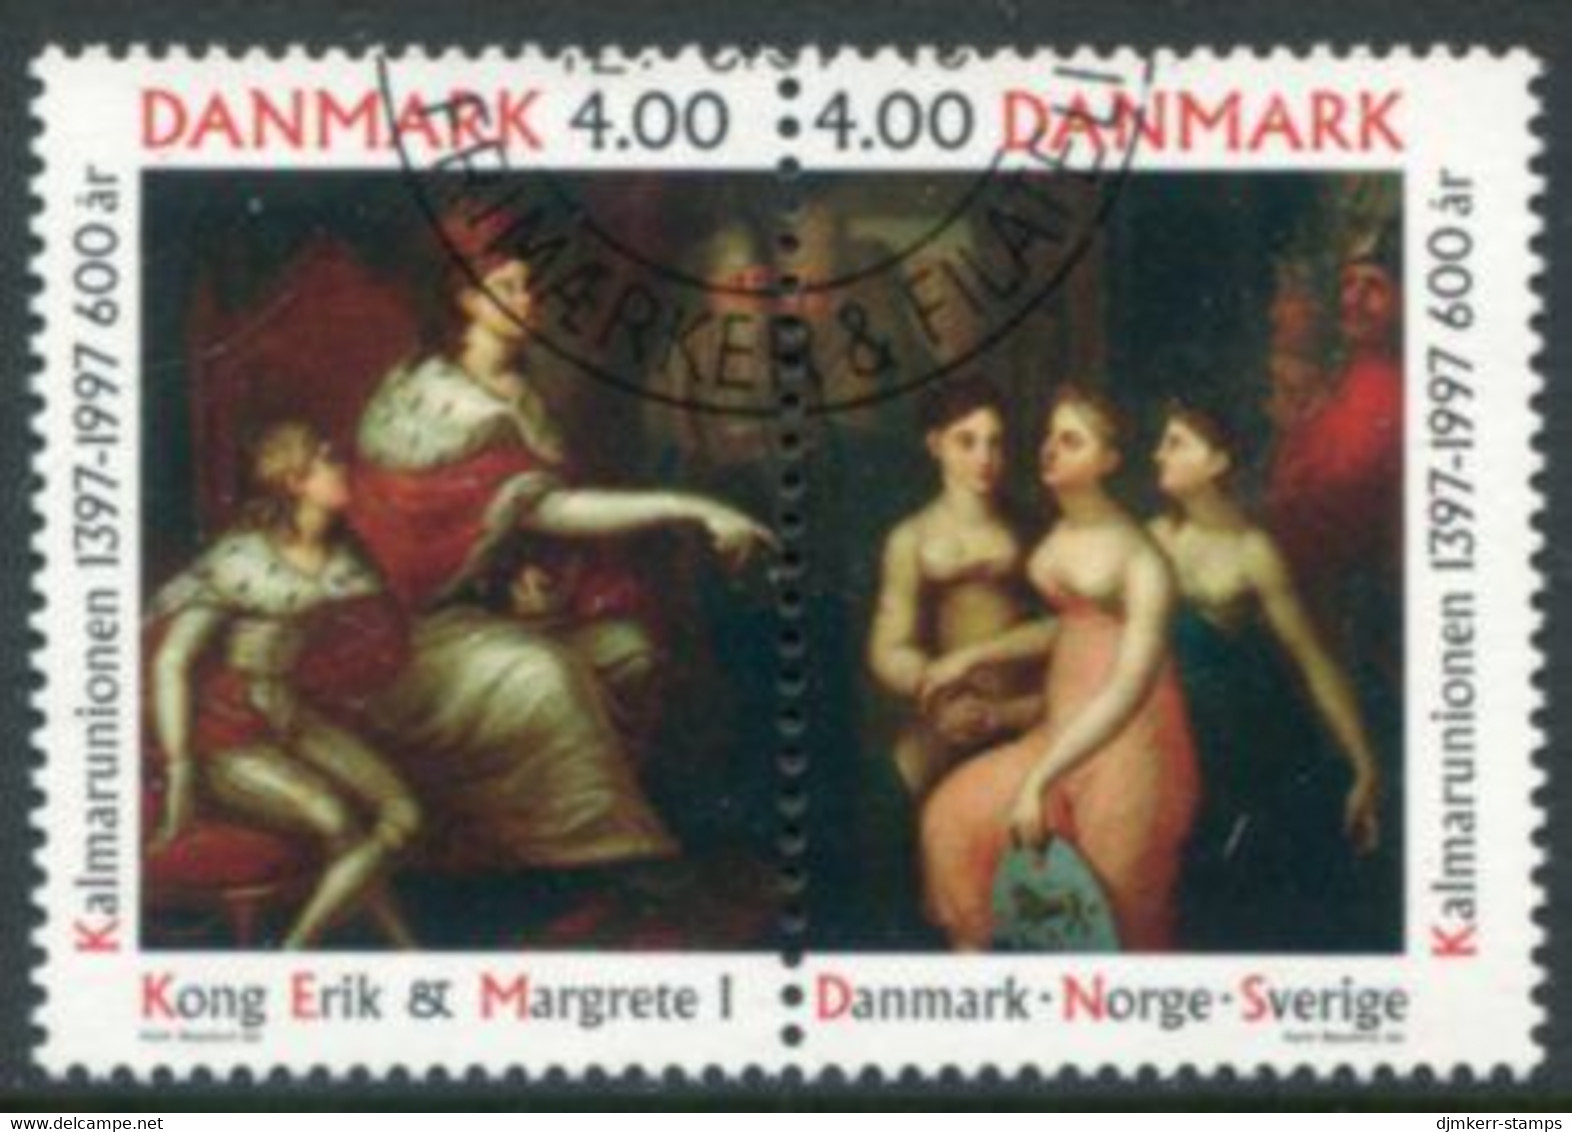 DENMARK 1997 Kalmar Union Used.  Michel 1153-54 - Used Stamps